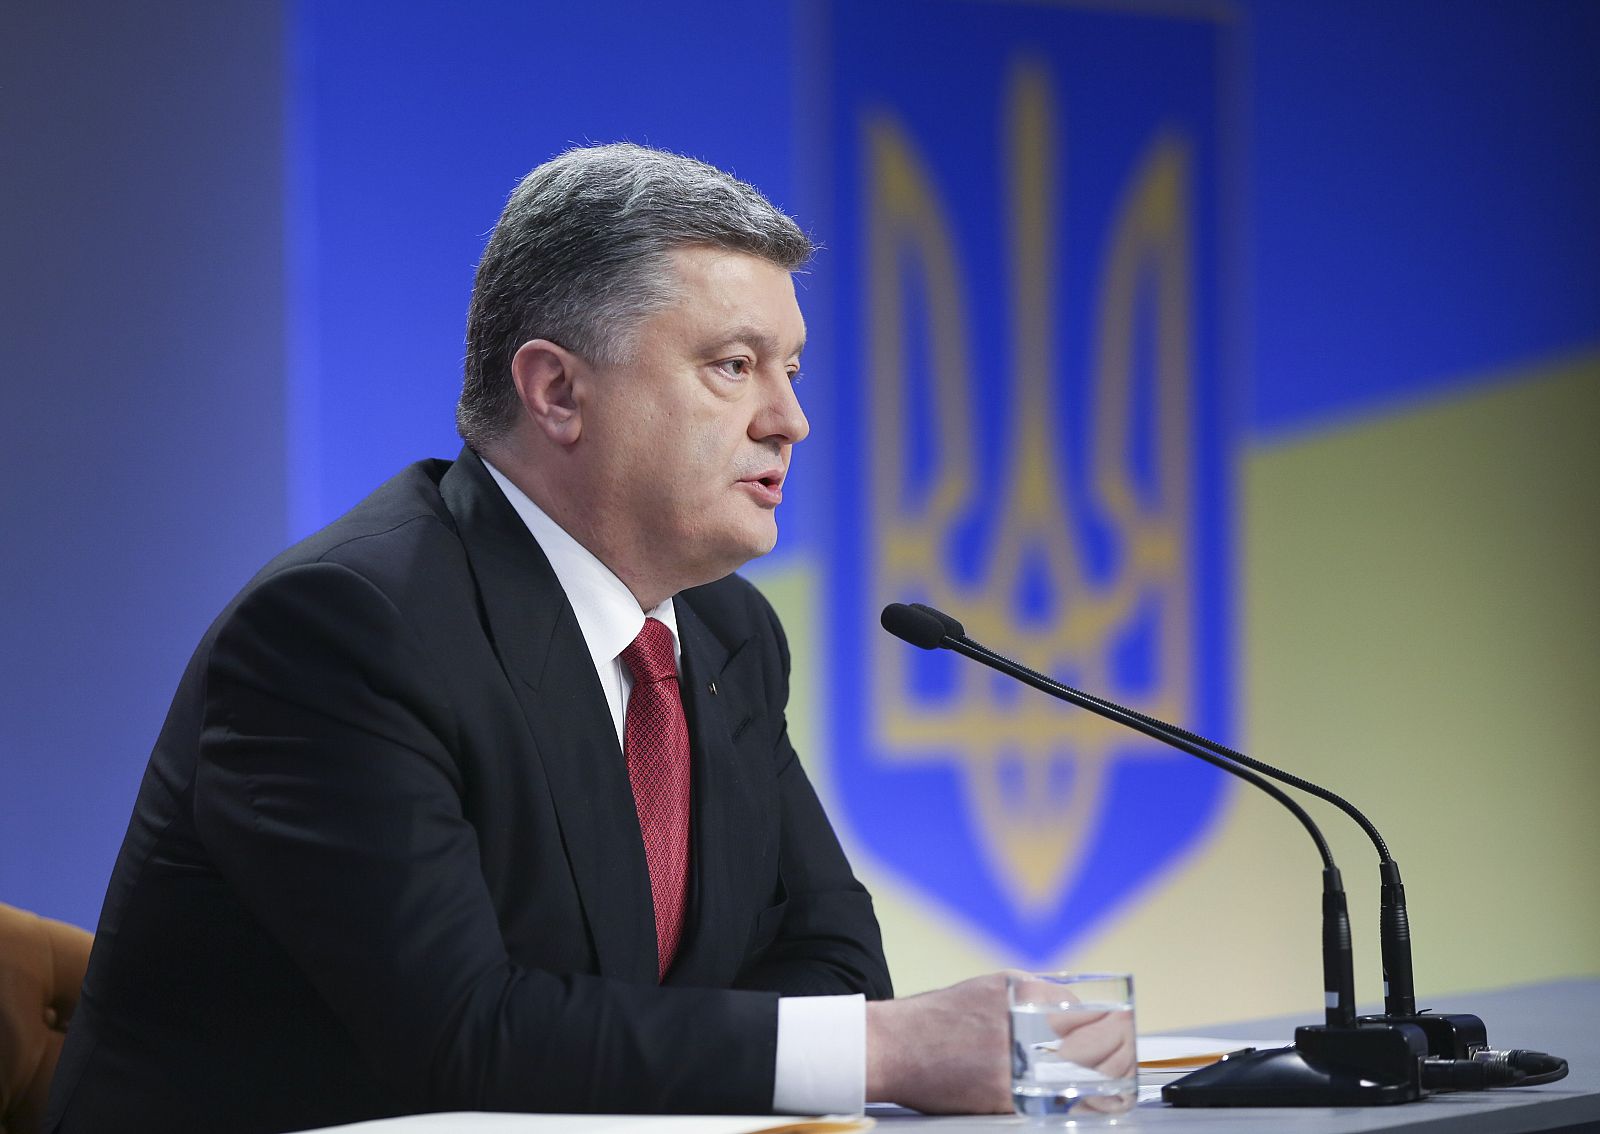 Ukrainian President Poroshenko speaks during a news conference in Kiev